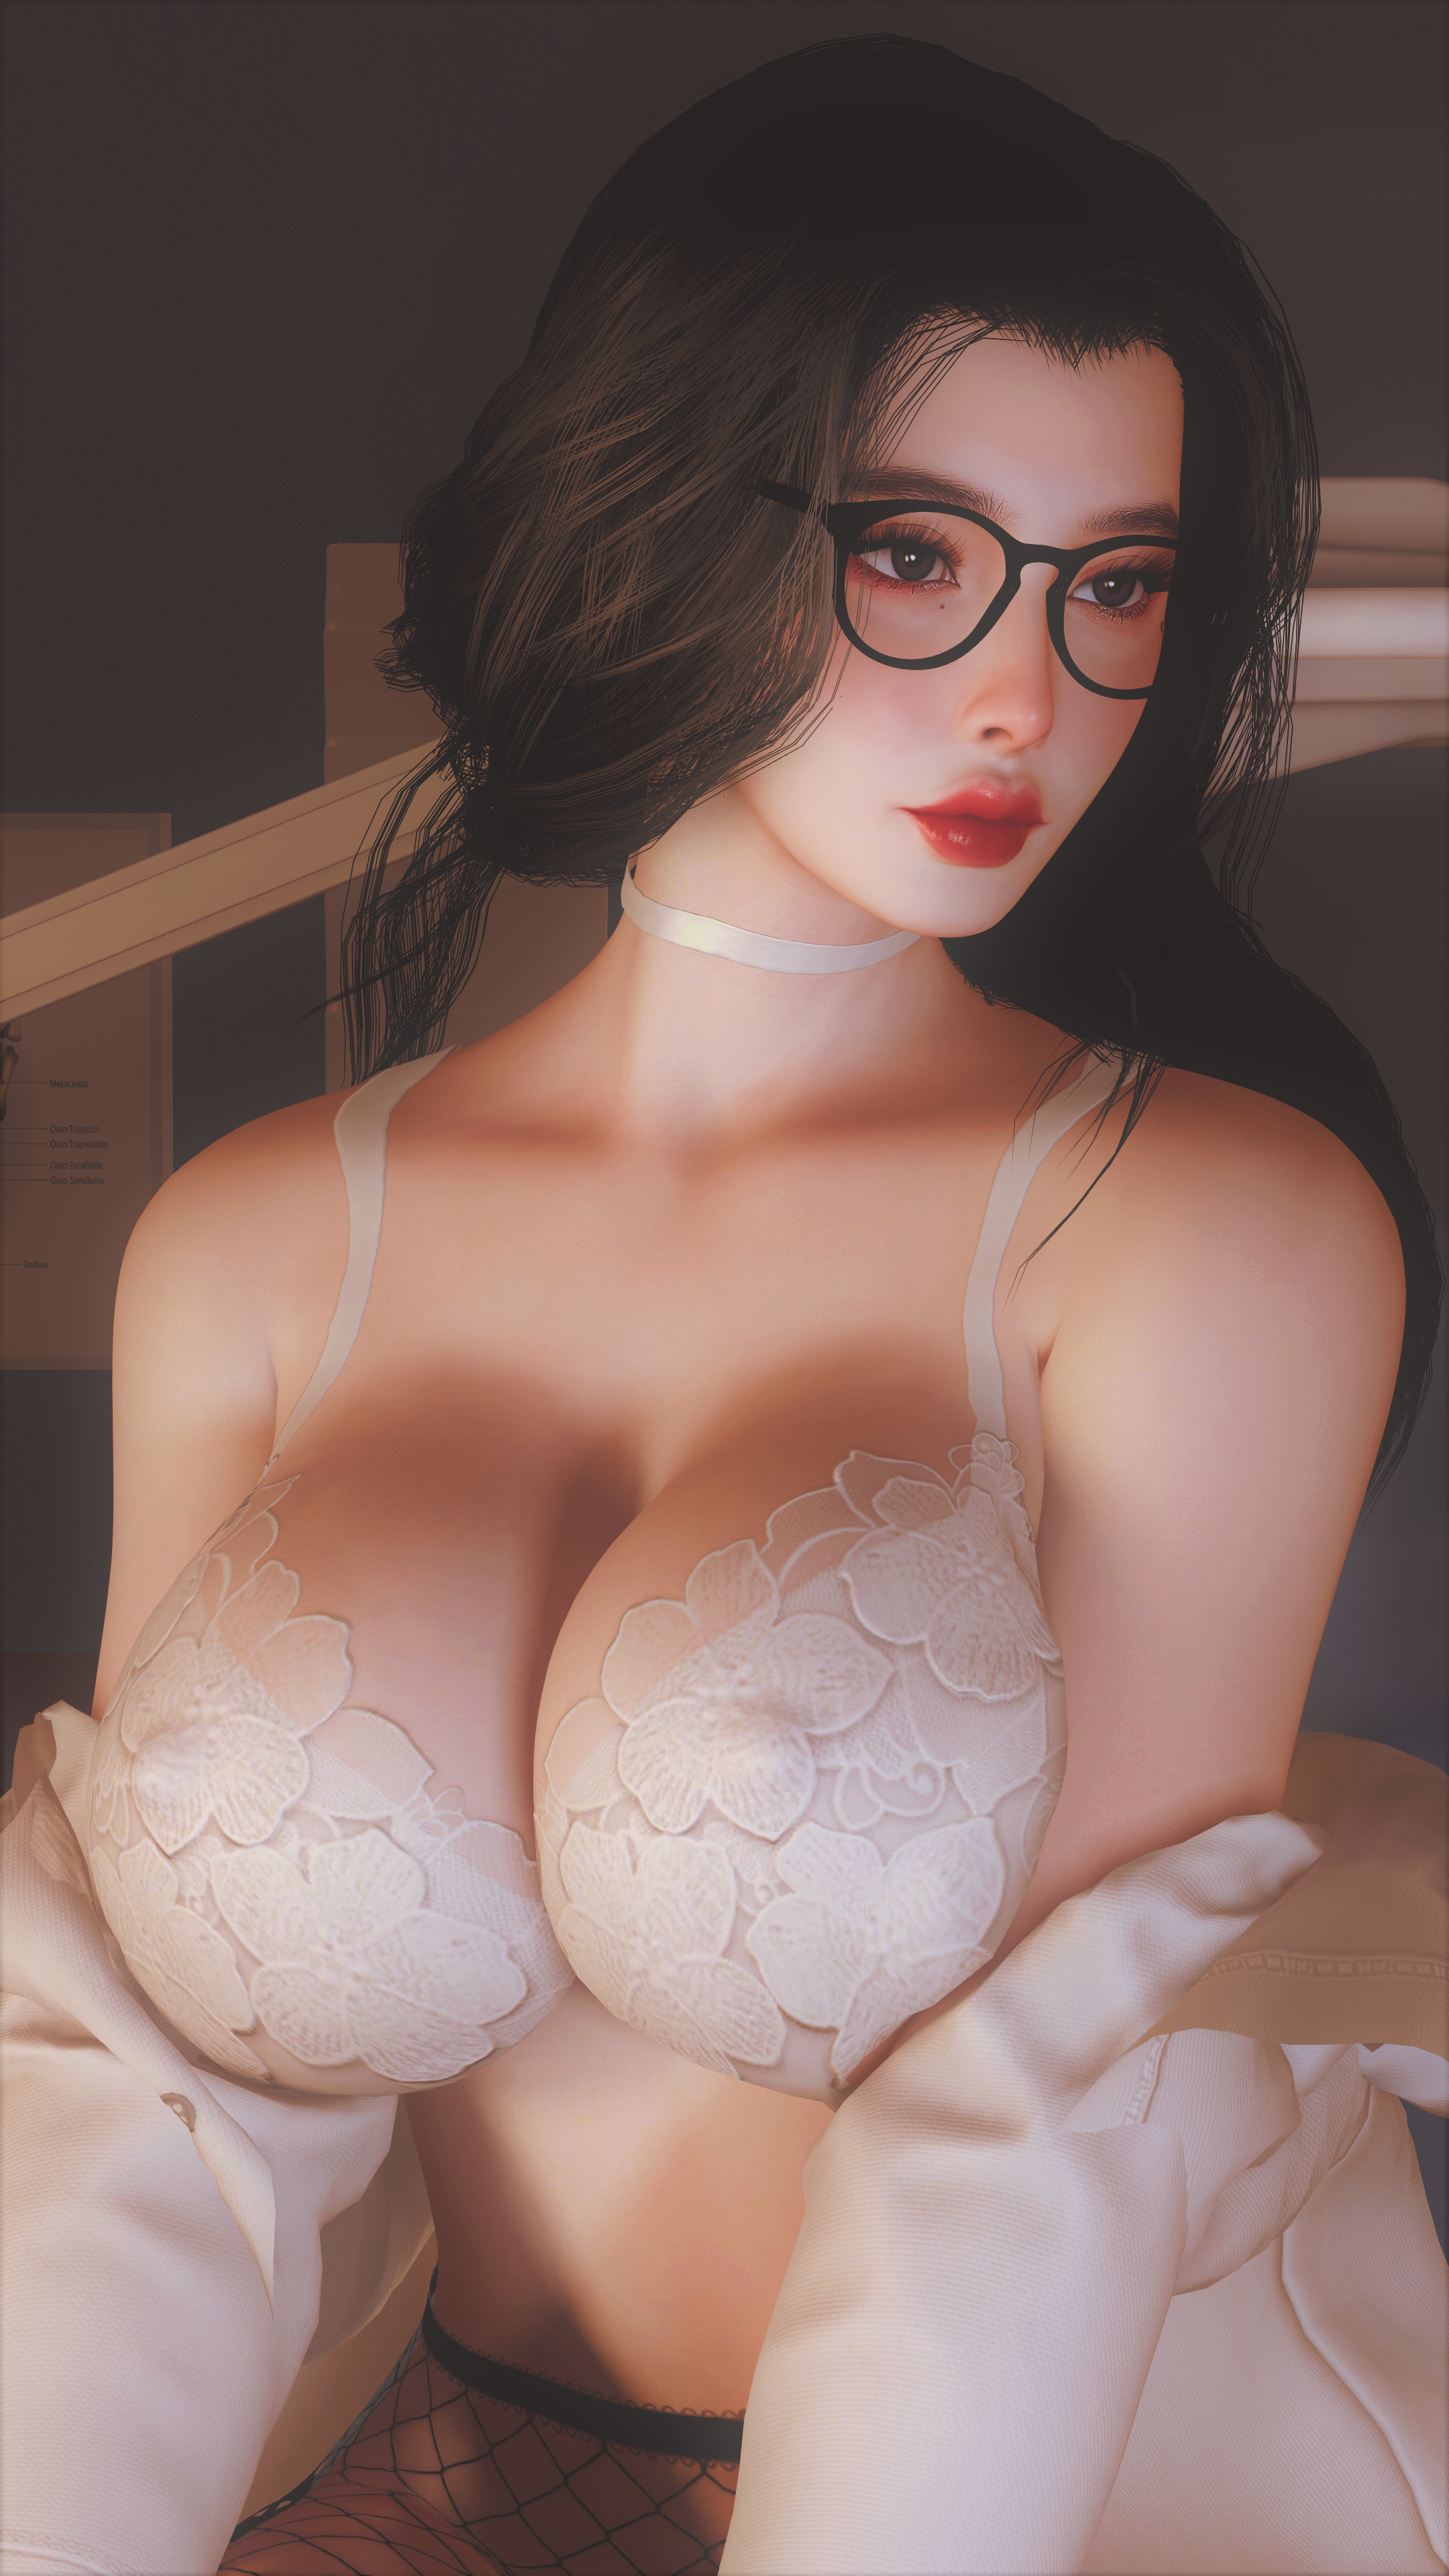 women, big boobs, open shirt, CGI, artwork, bra, glasses | 2160x3840  Wallpaper - wallhaven.cc